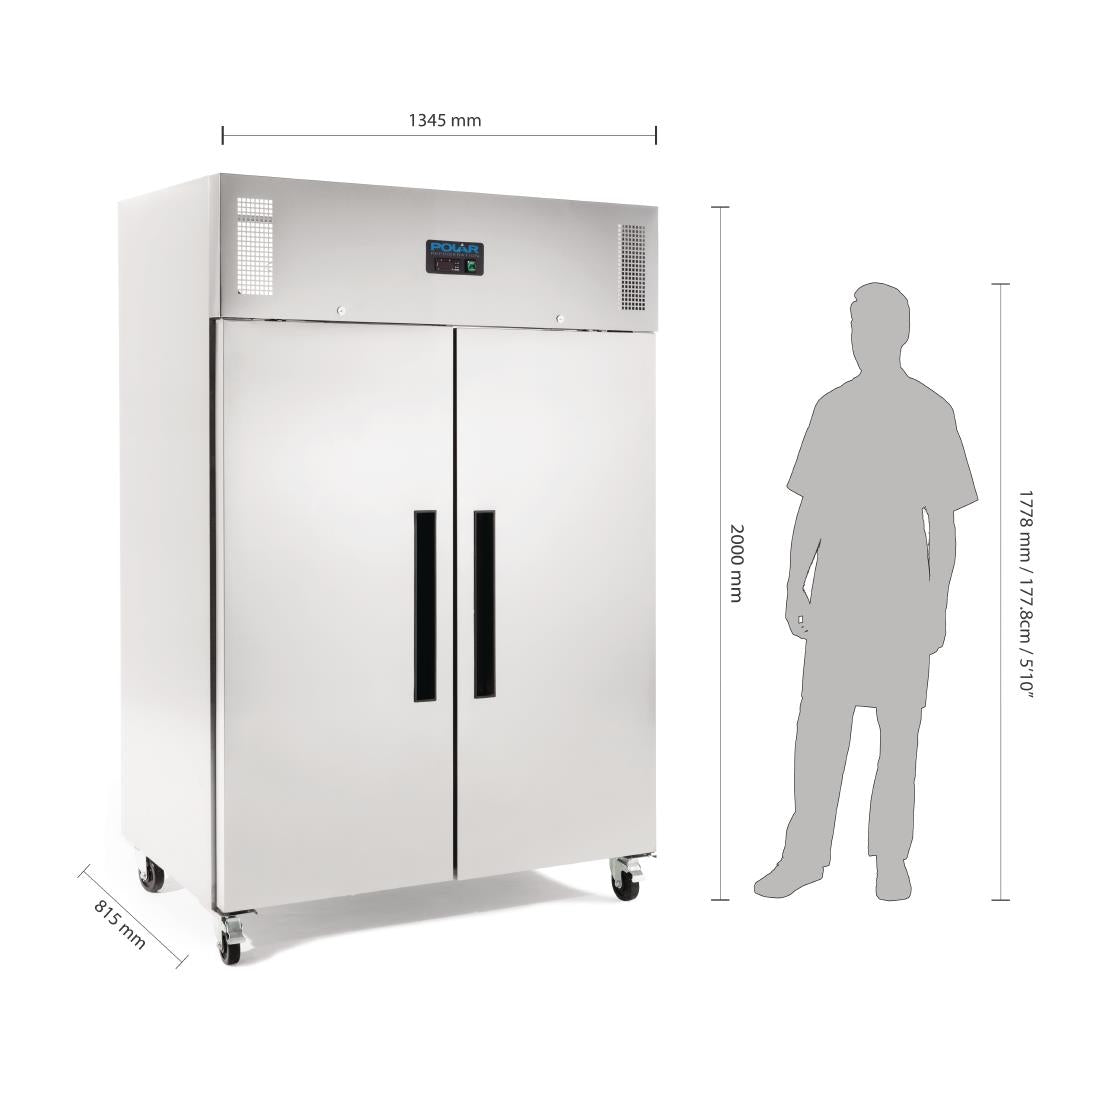 G595 Polar G-Series Upright Double Door Freezer 1200Ltr JD Catering Equipment Solutions Ltd